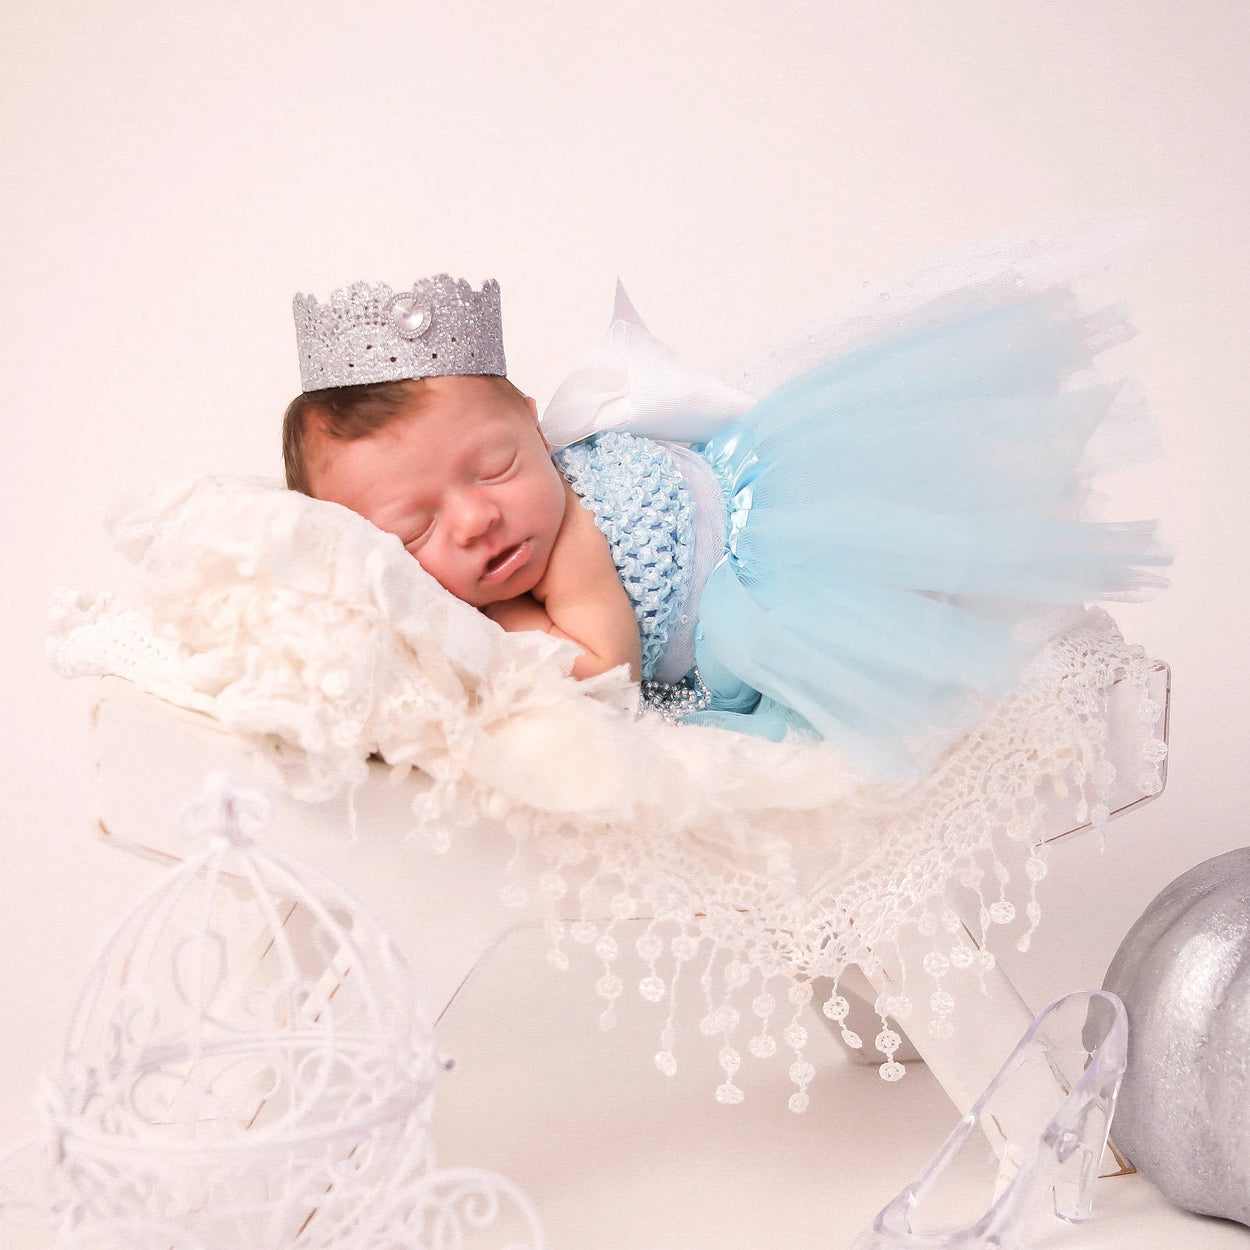 newborn baby princess dress